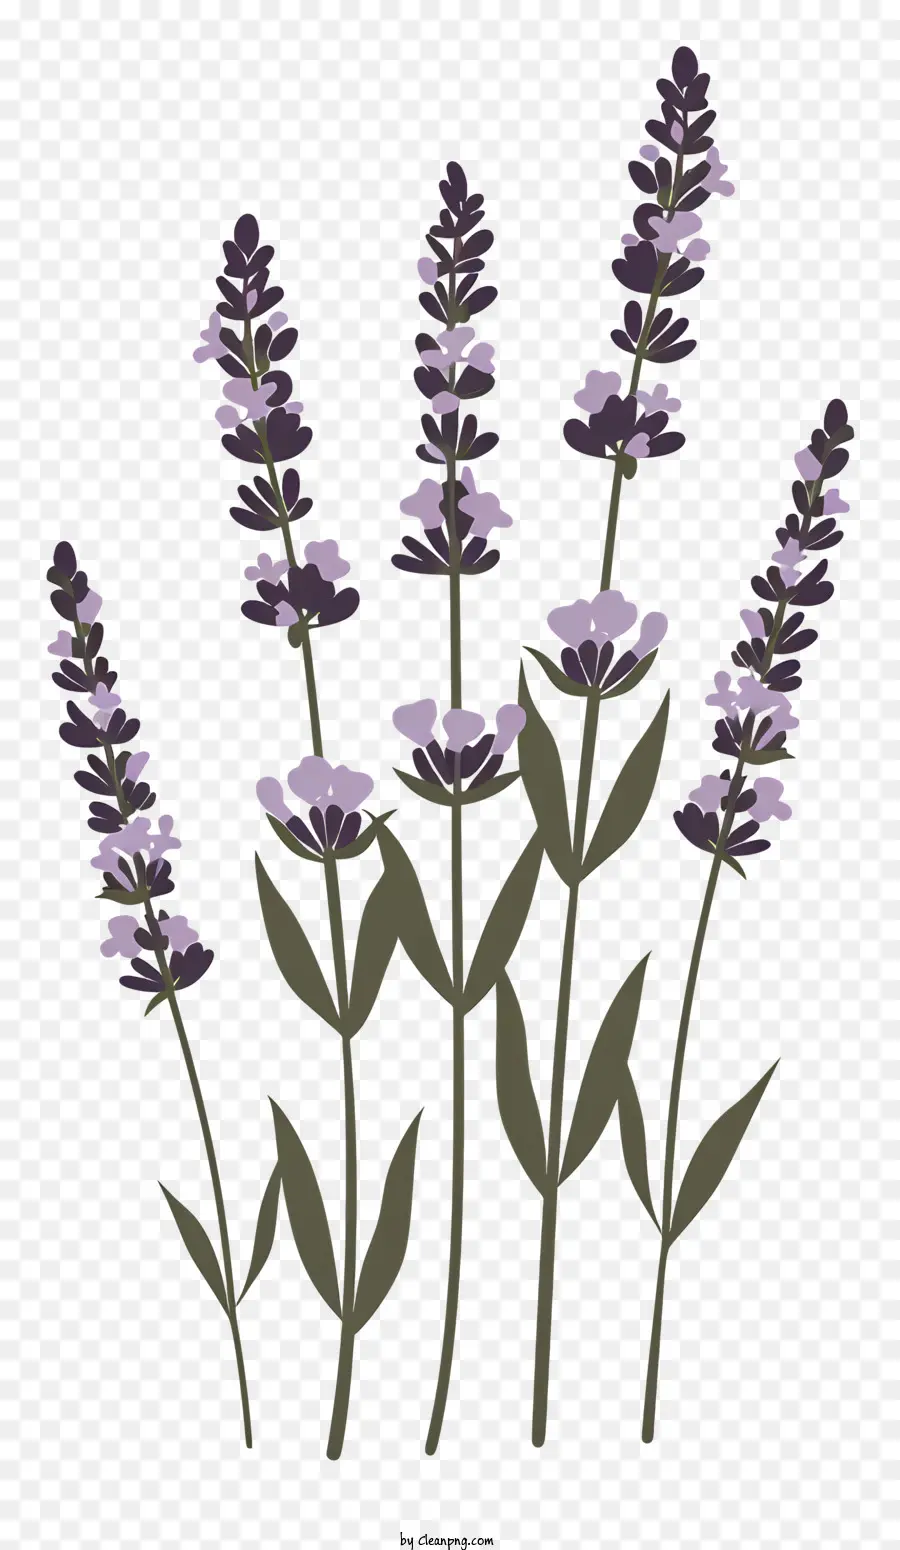 Lavendel - Lavendelfeld mit lila Blüten in Blüte